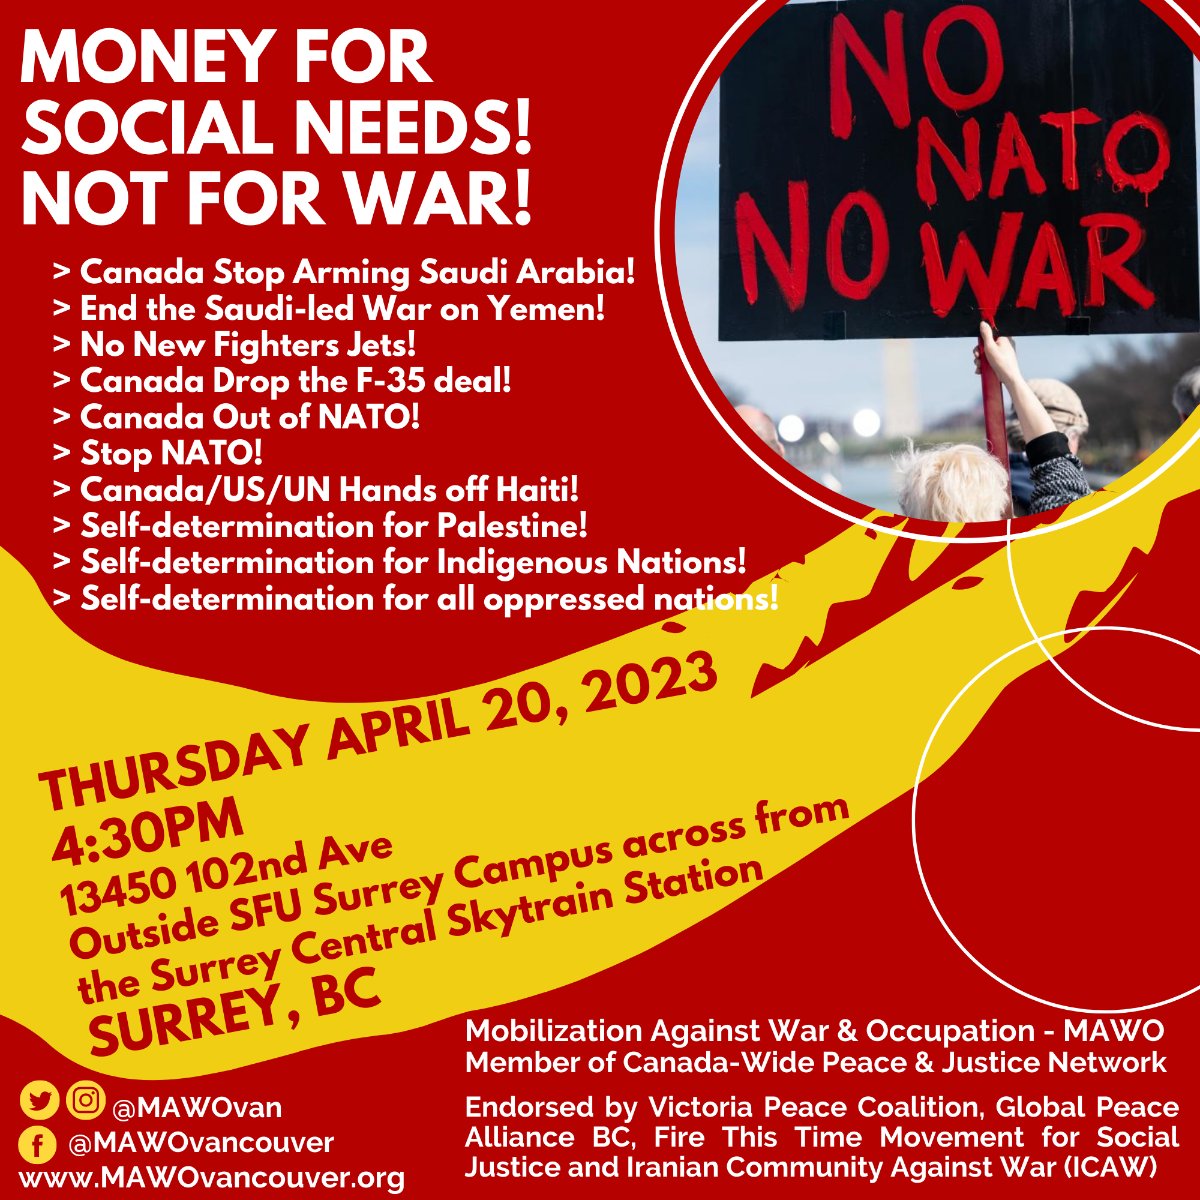 📢✊ Join to demand 'Money for Social Needs Not for War!' Thurs Apr 20 4:30pm outside Surrey Ctrl Skytrain @ University Dr. & City Pkwy. #CanadaStopArmingSaudi #FundPeaceNotWar #StopNATO #CanadaOutofNATO #EarthDay2023 #WarIsNotGreen #vanpoli #cdnpoli #EarthDayEndWar